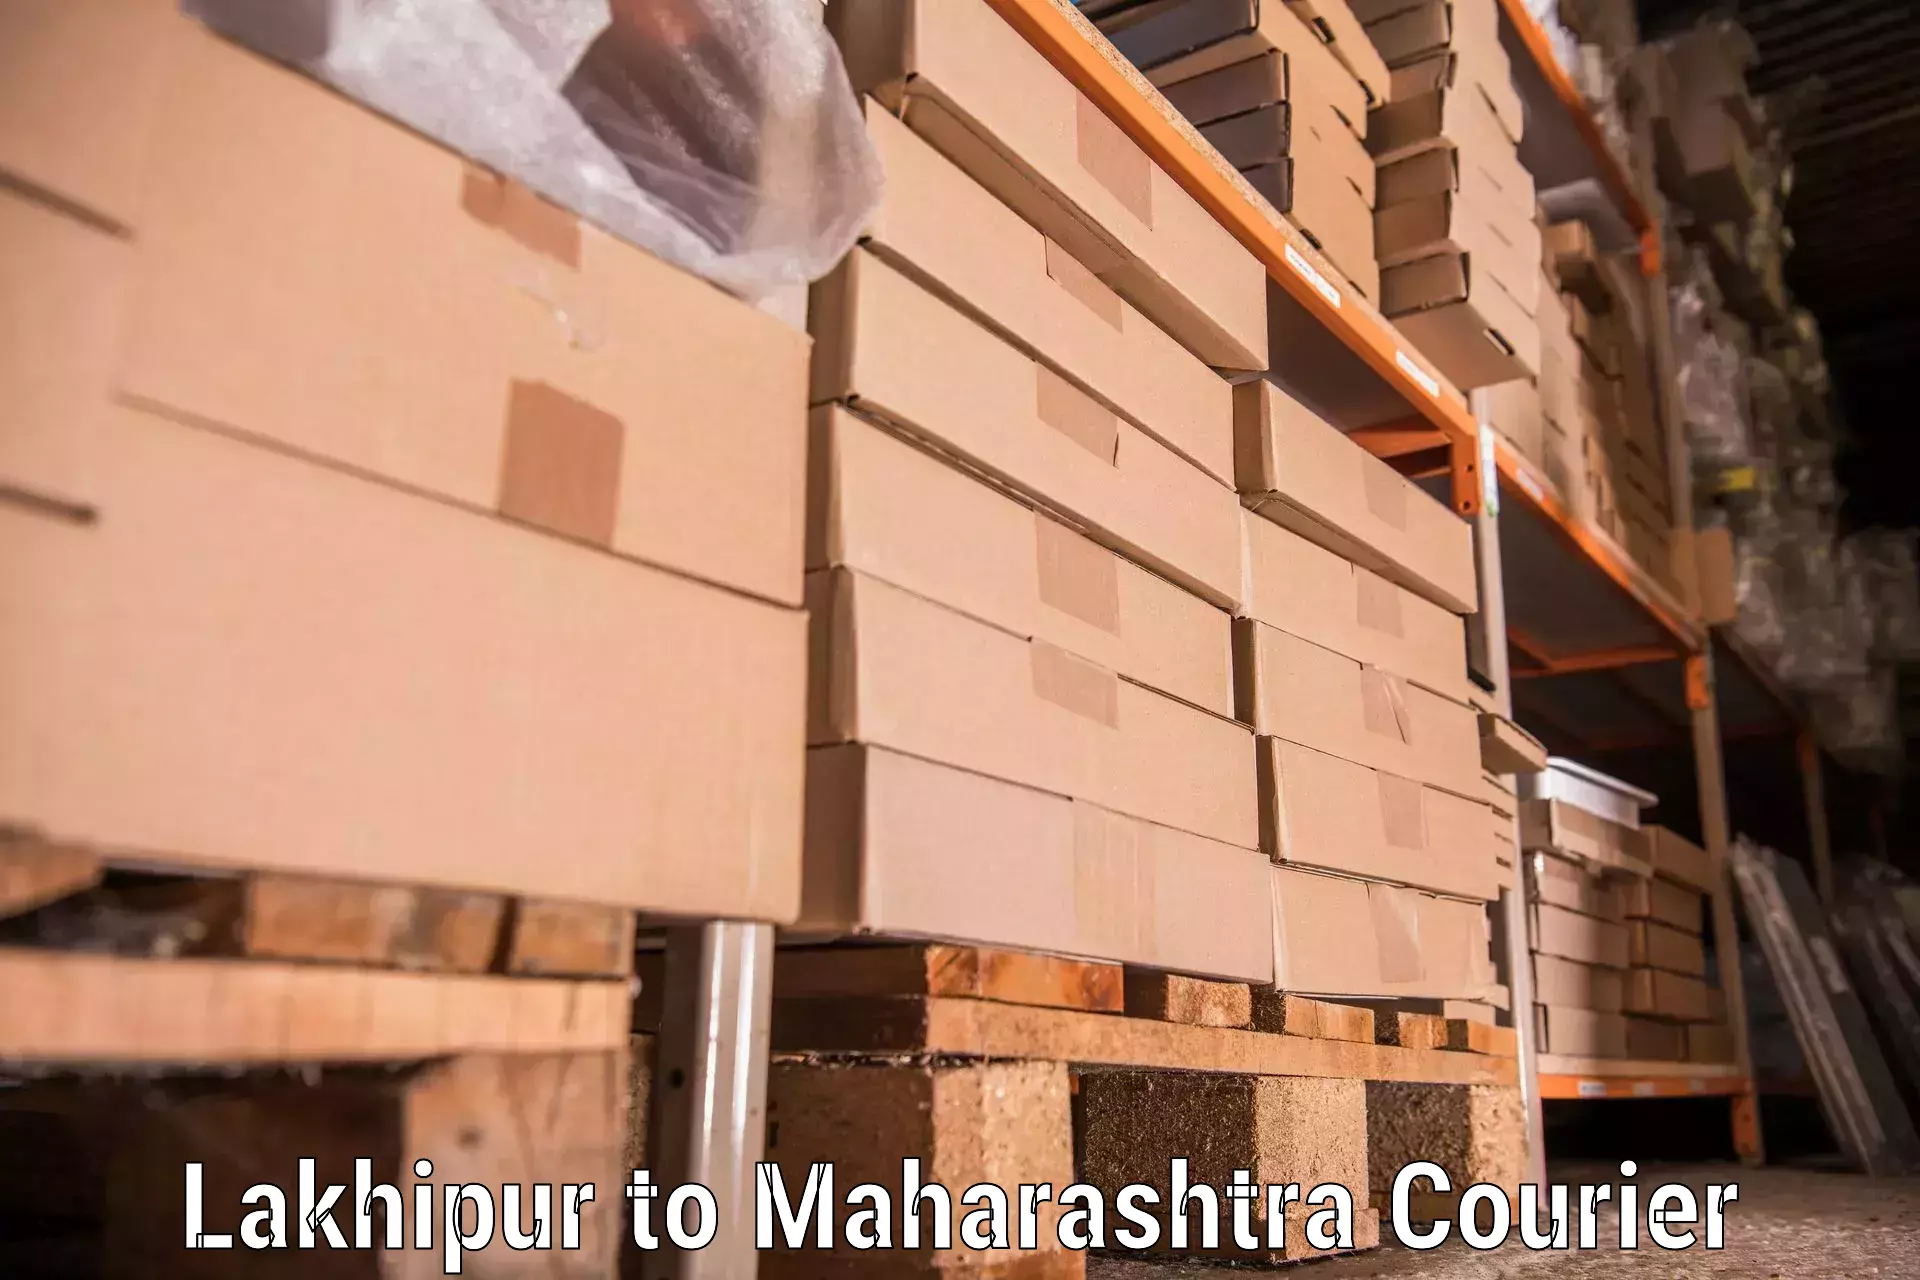 Trusted moving company Lakhipur to Navi Mumbai